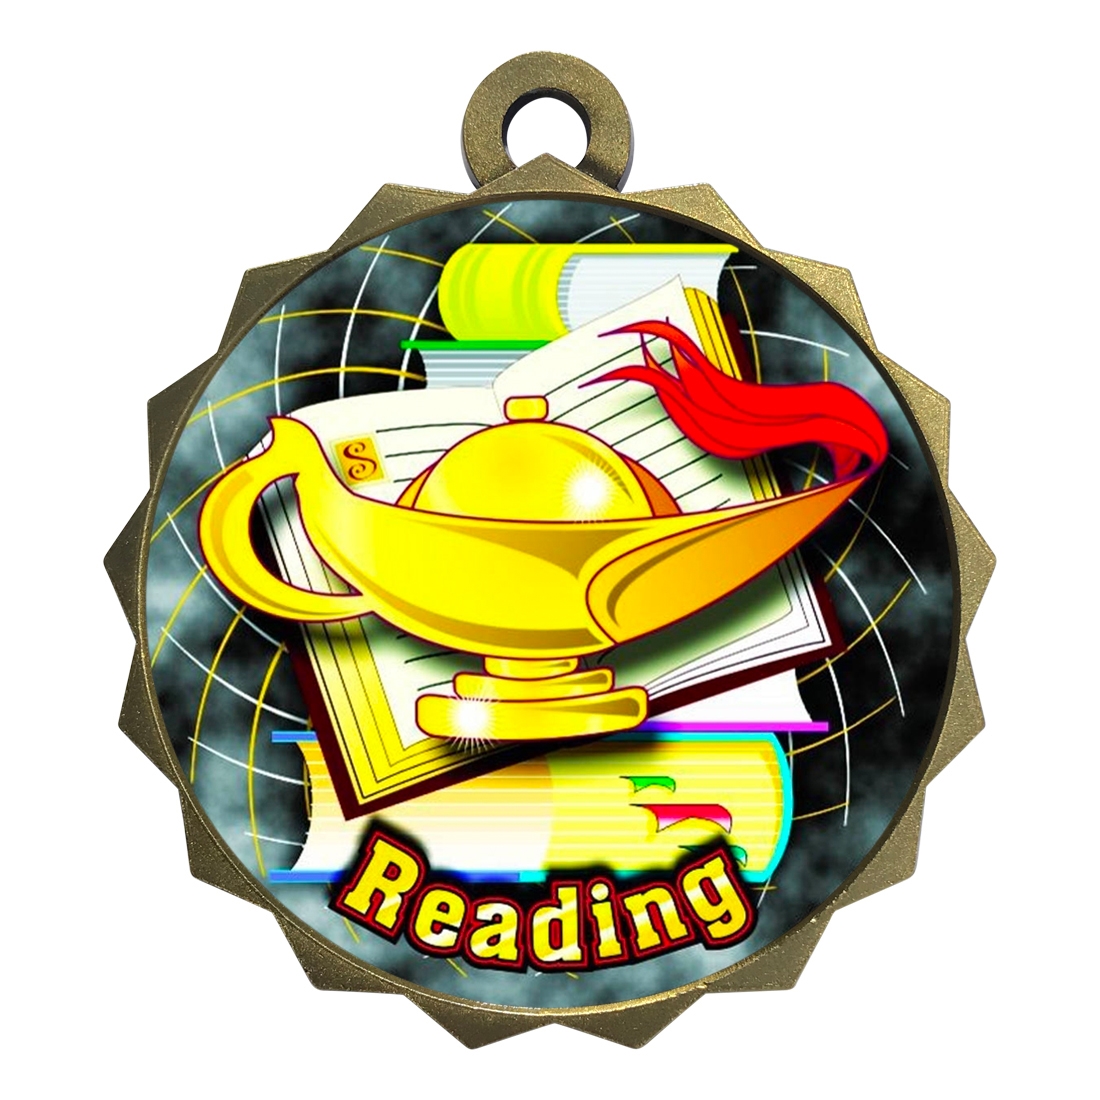 2-1/4" Reading Medal